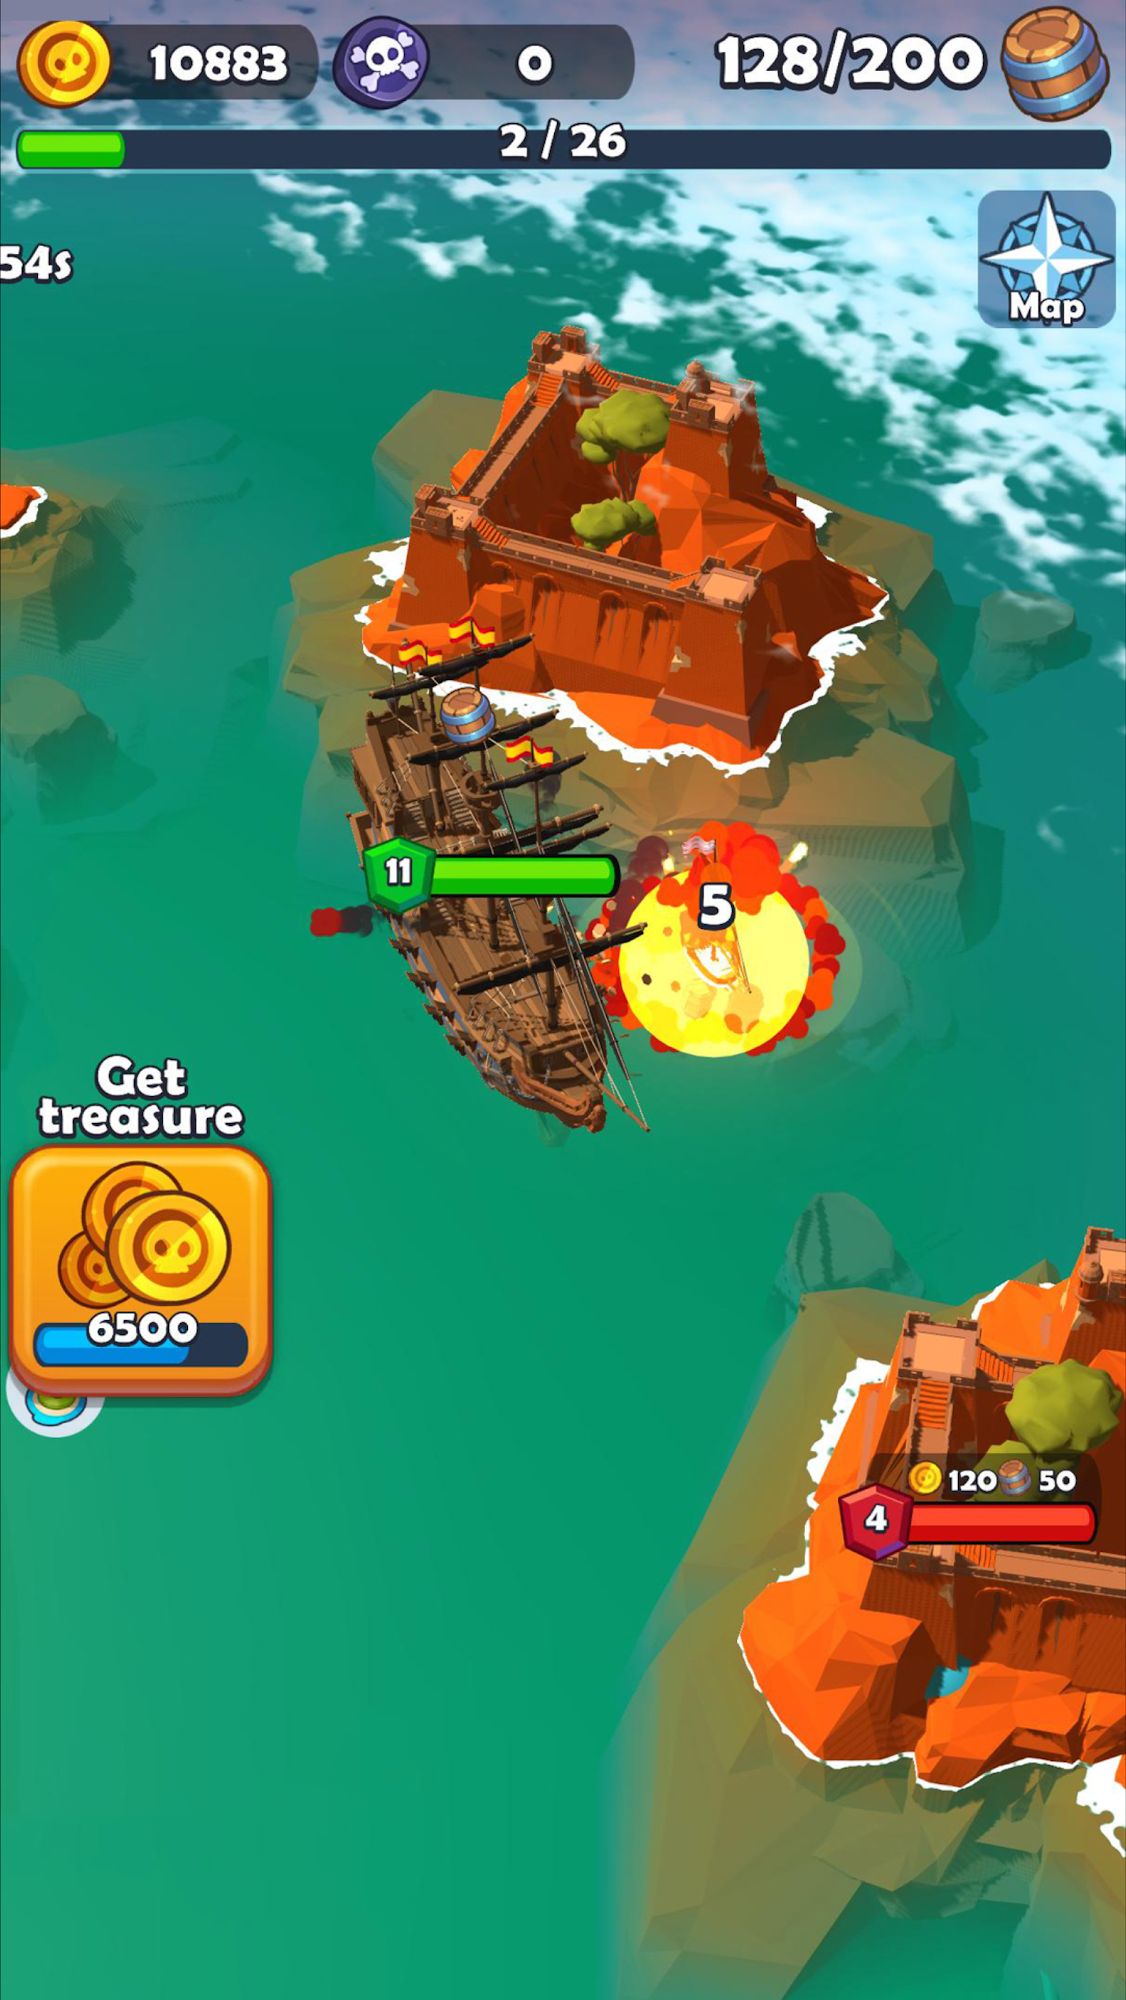 Pirate Raid - Caribbean Battle - Android game screenshots.